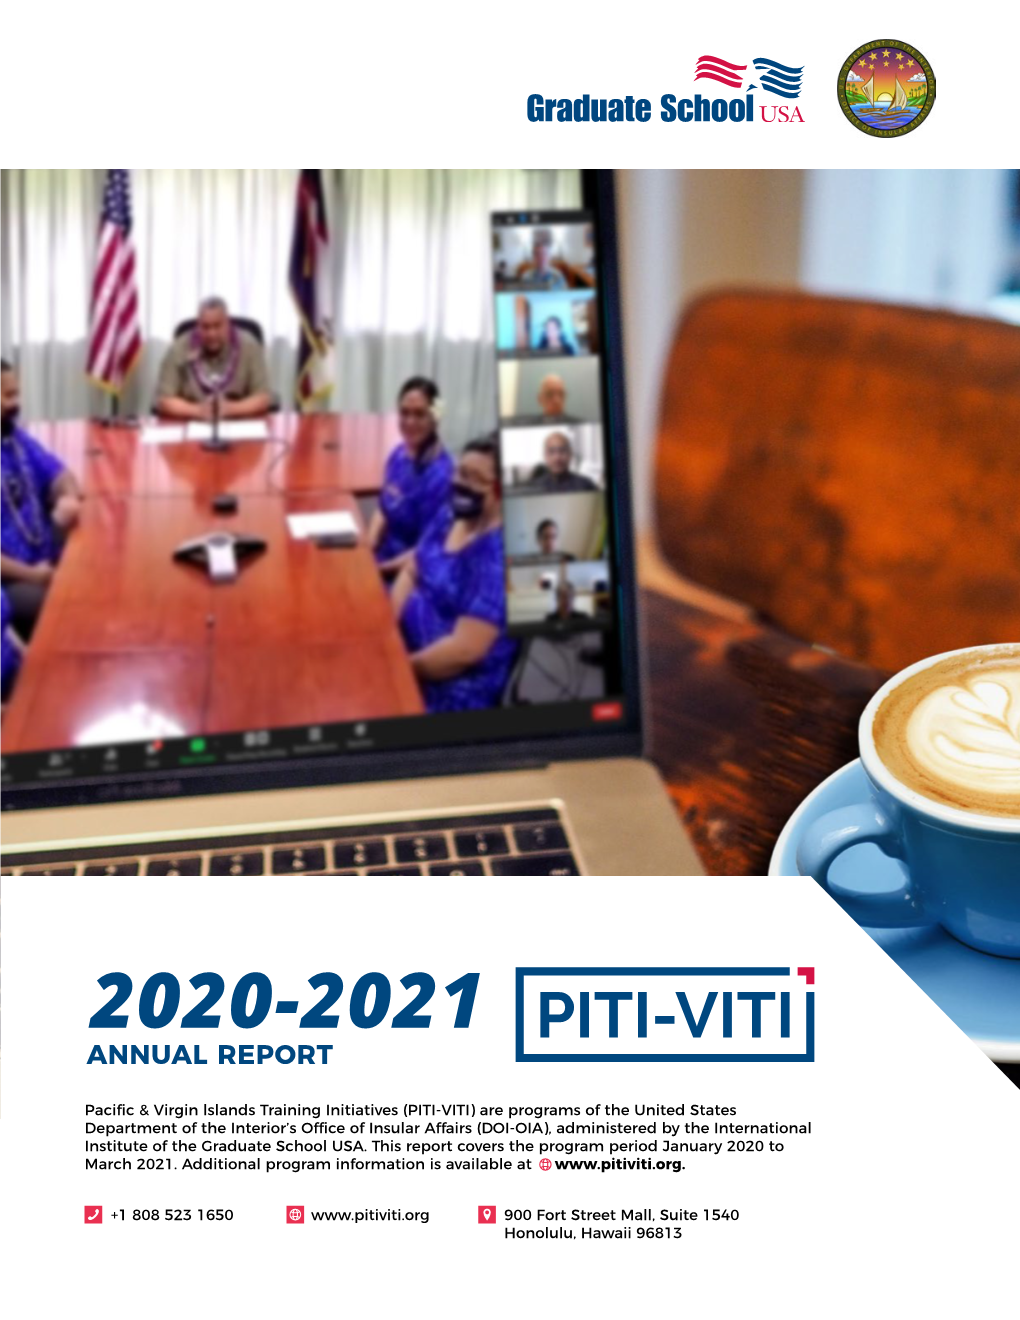 PITI-VITI 2020-2021 Annual Report